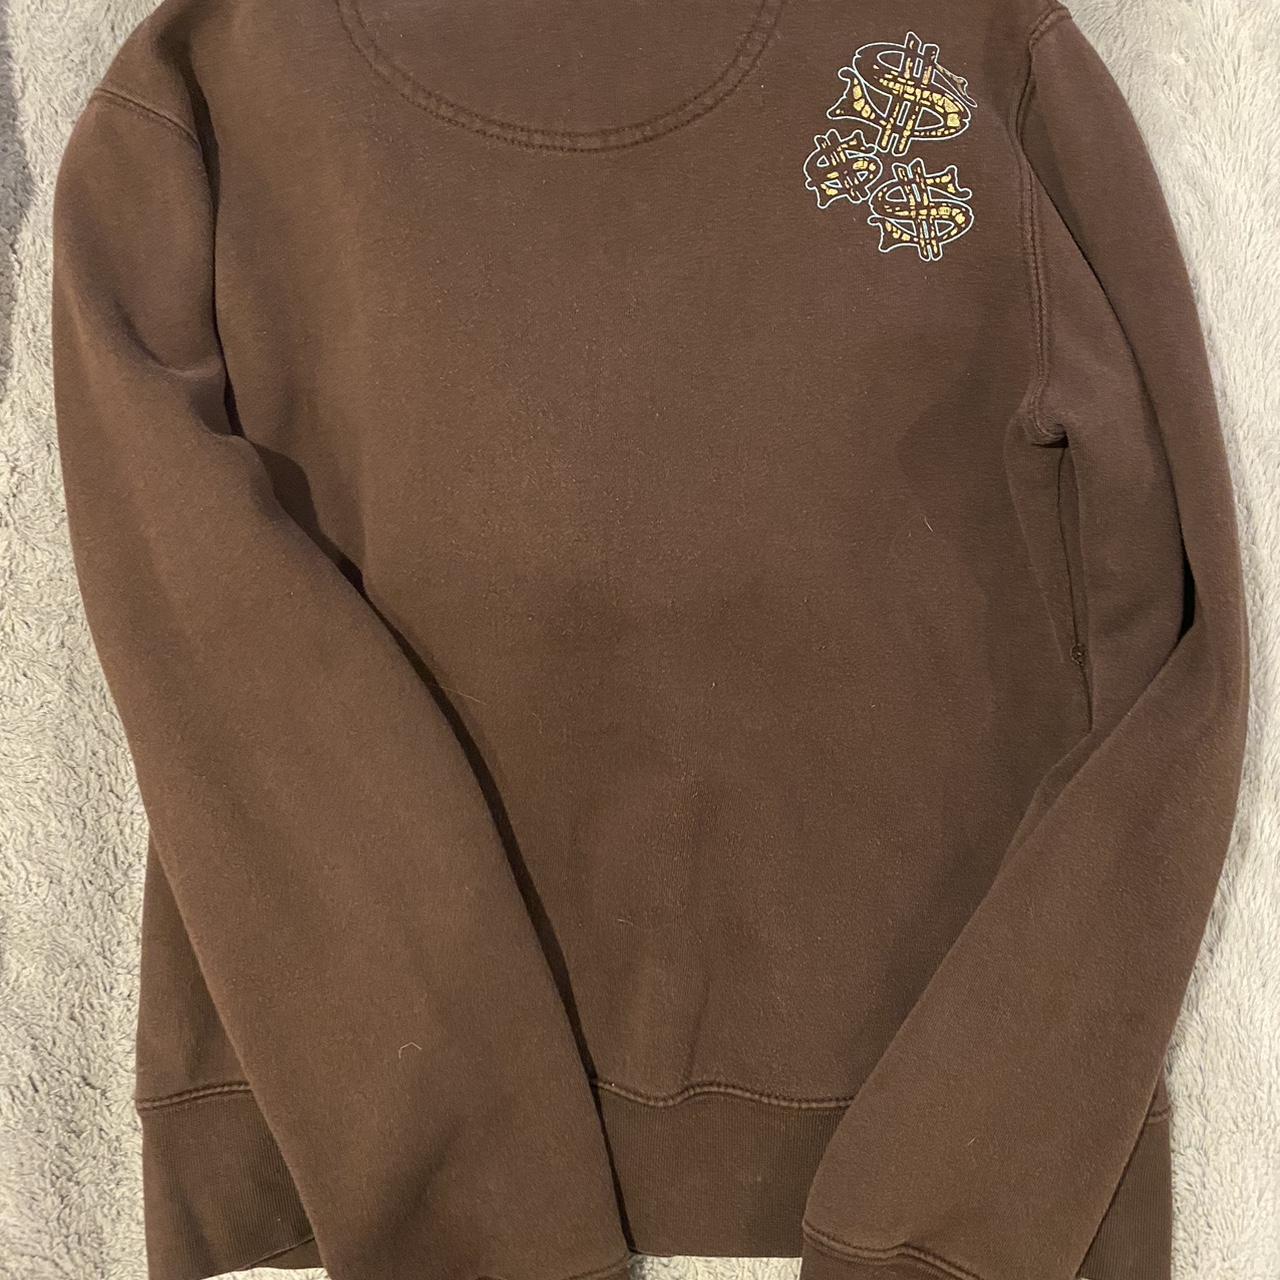 Brown vintage graphic sweatshirt Size small but - Depop